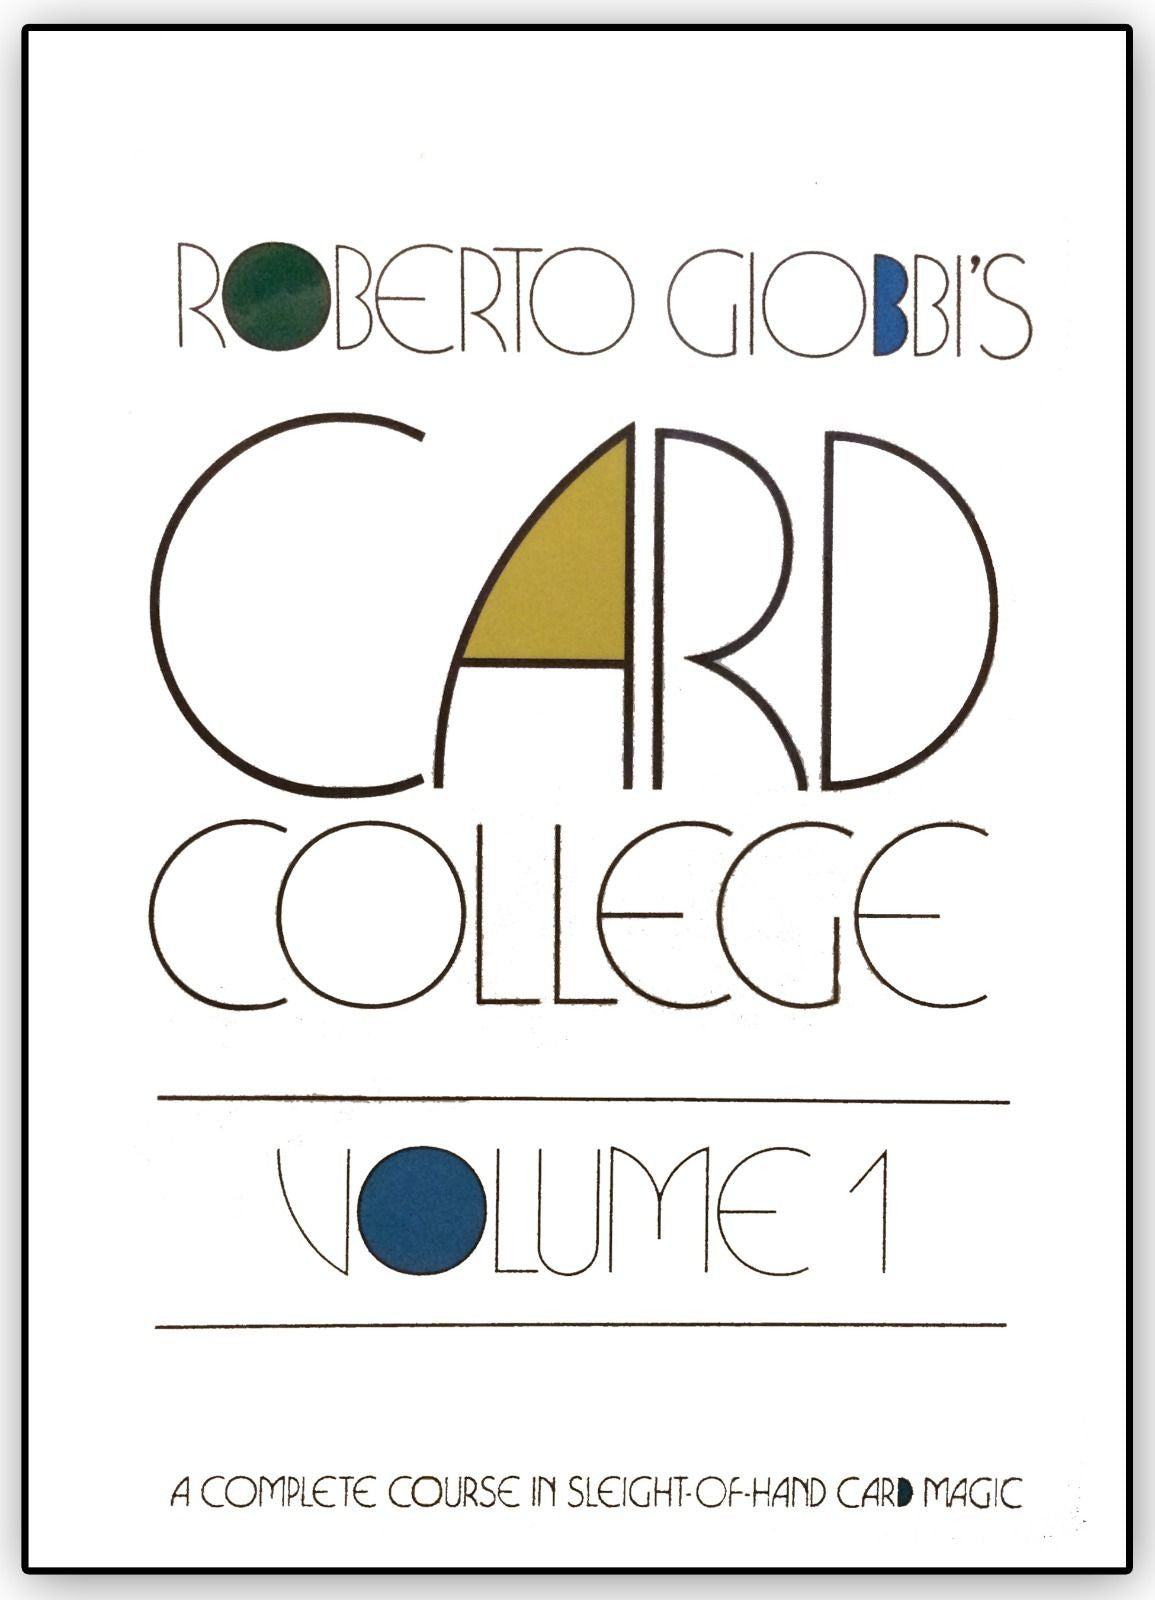 Card College Volume 1 by Roberto Giobbi